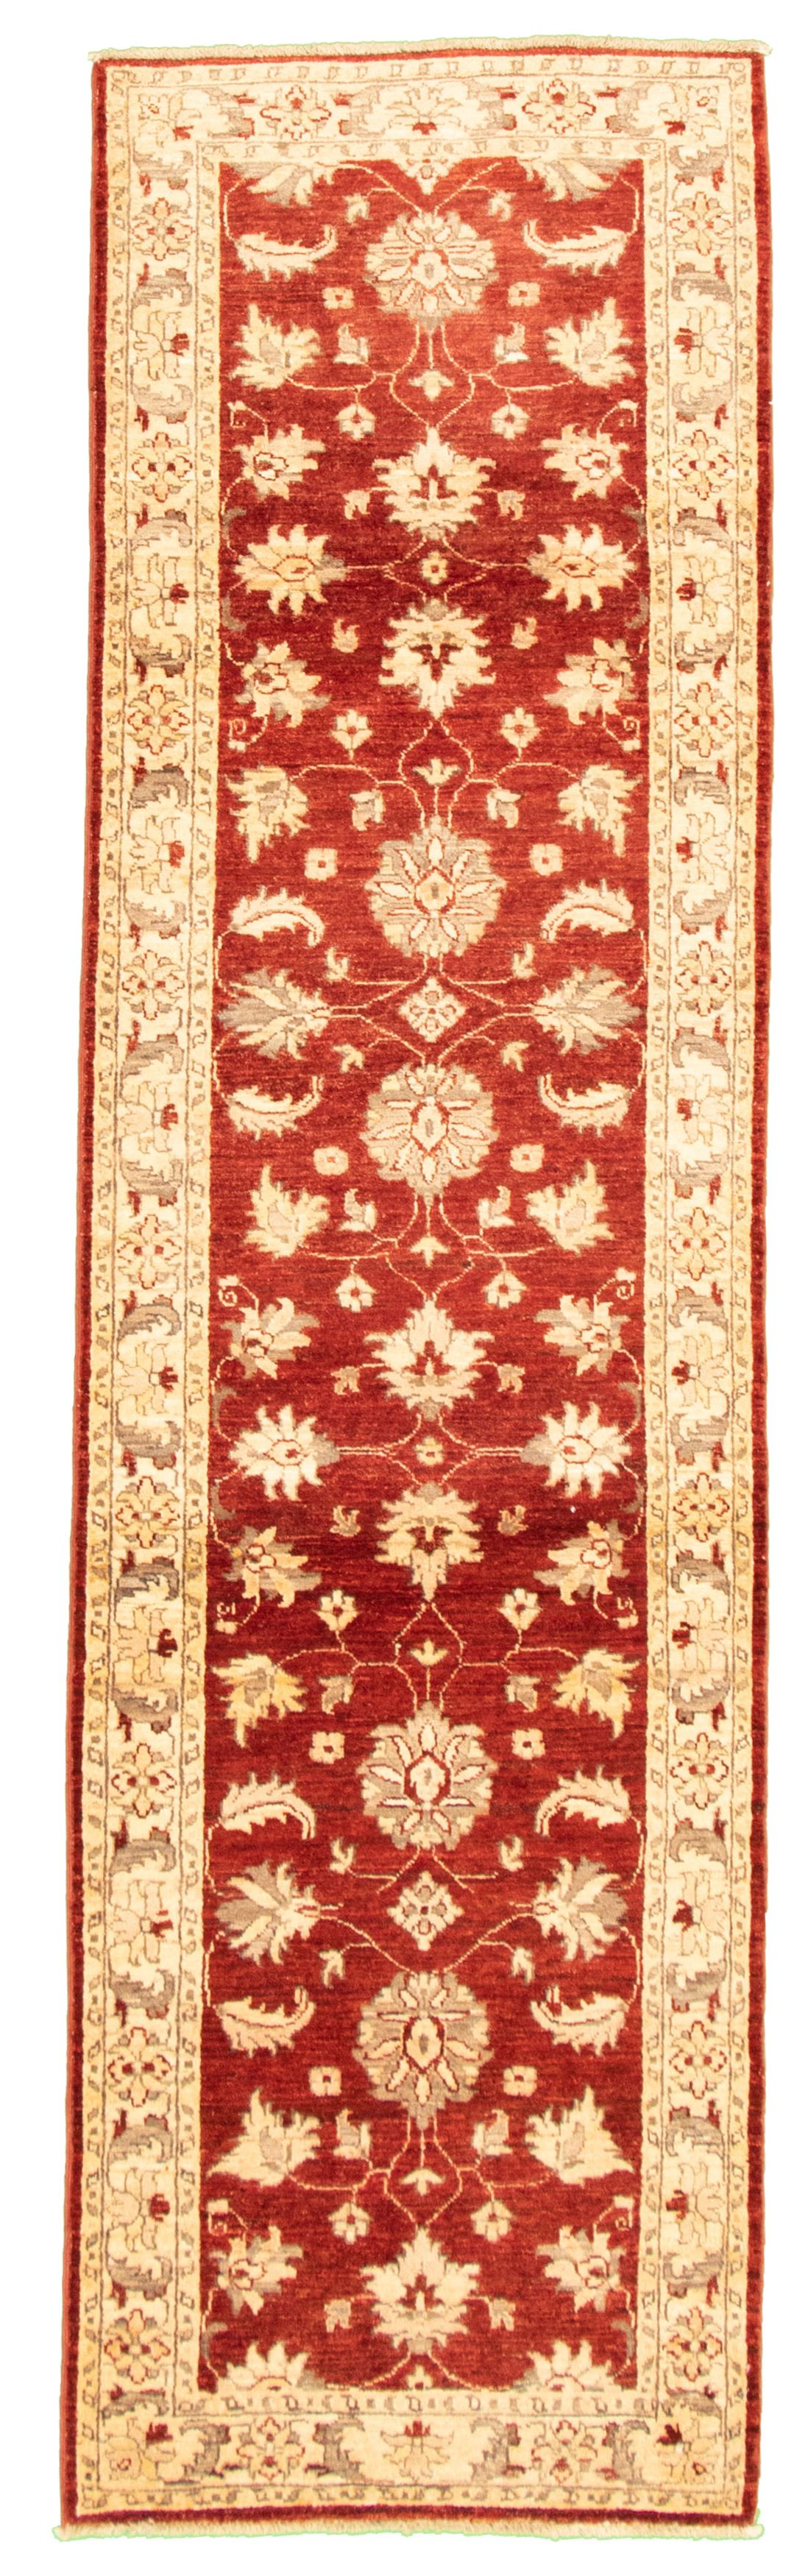 Hand-knotted Chobi Finest Dark Copper Wool Rug 2'8" x 10'0" Size: 2'8" x 10'0"  